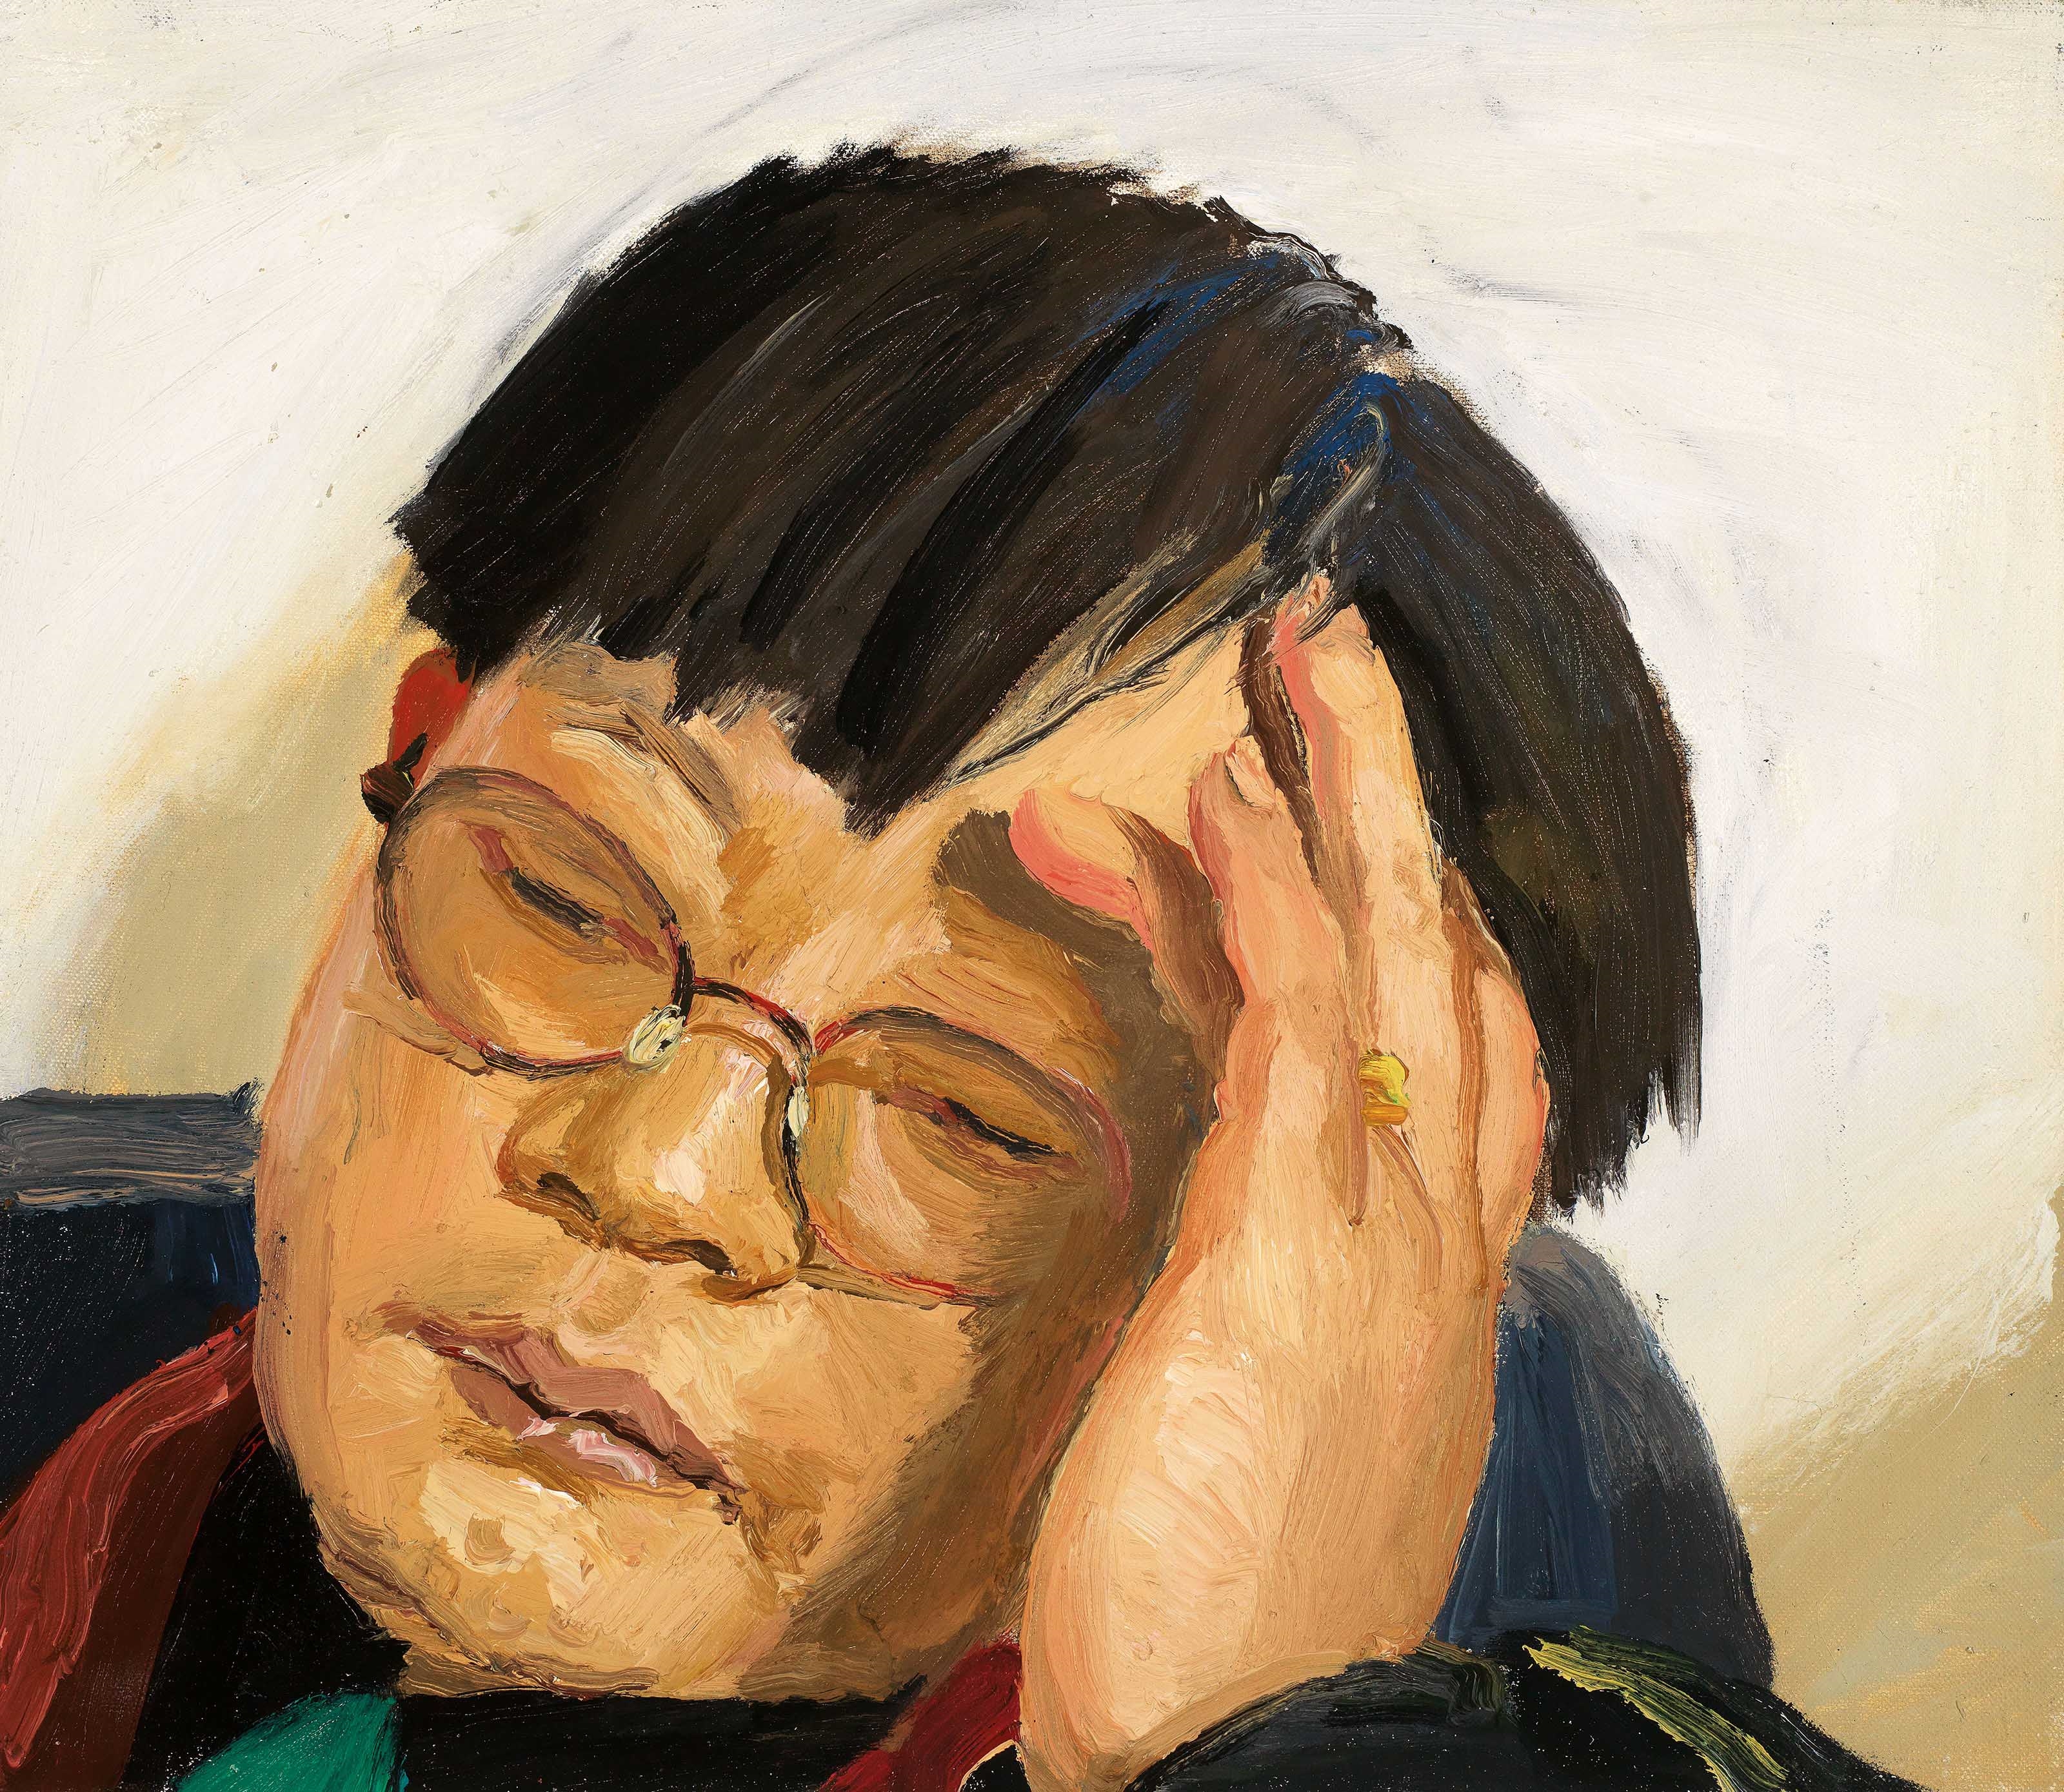 AFTERSHOCK: THE RECENT WORK OF LIU XIAODONG – Artforum